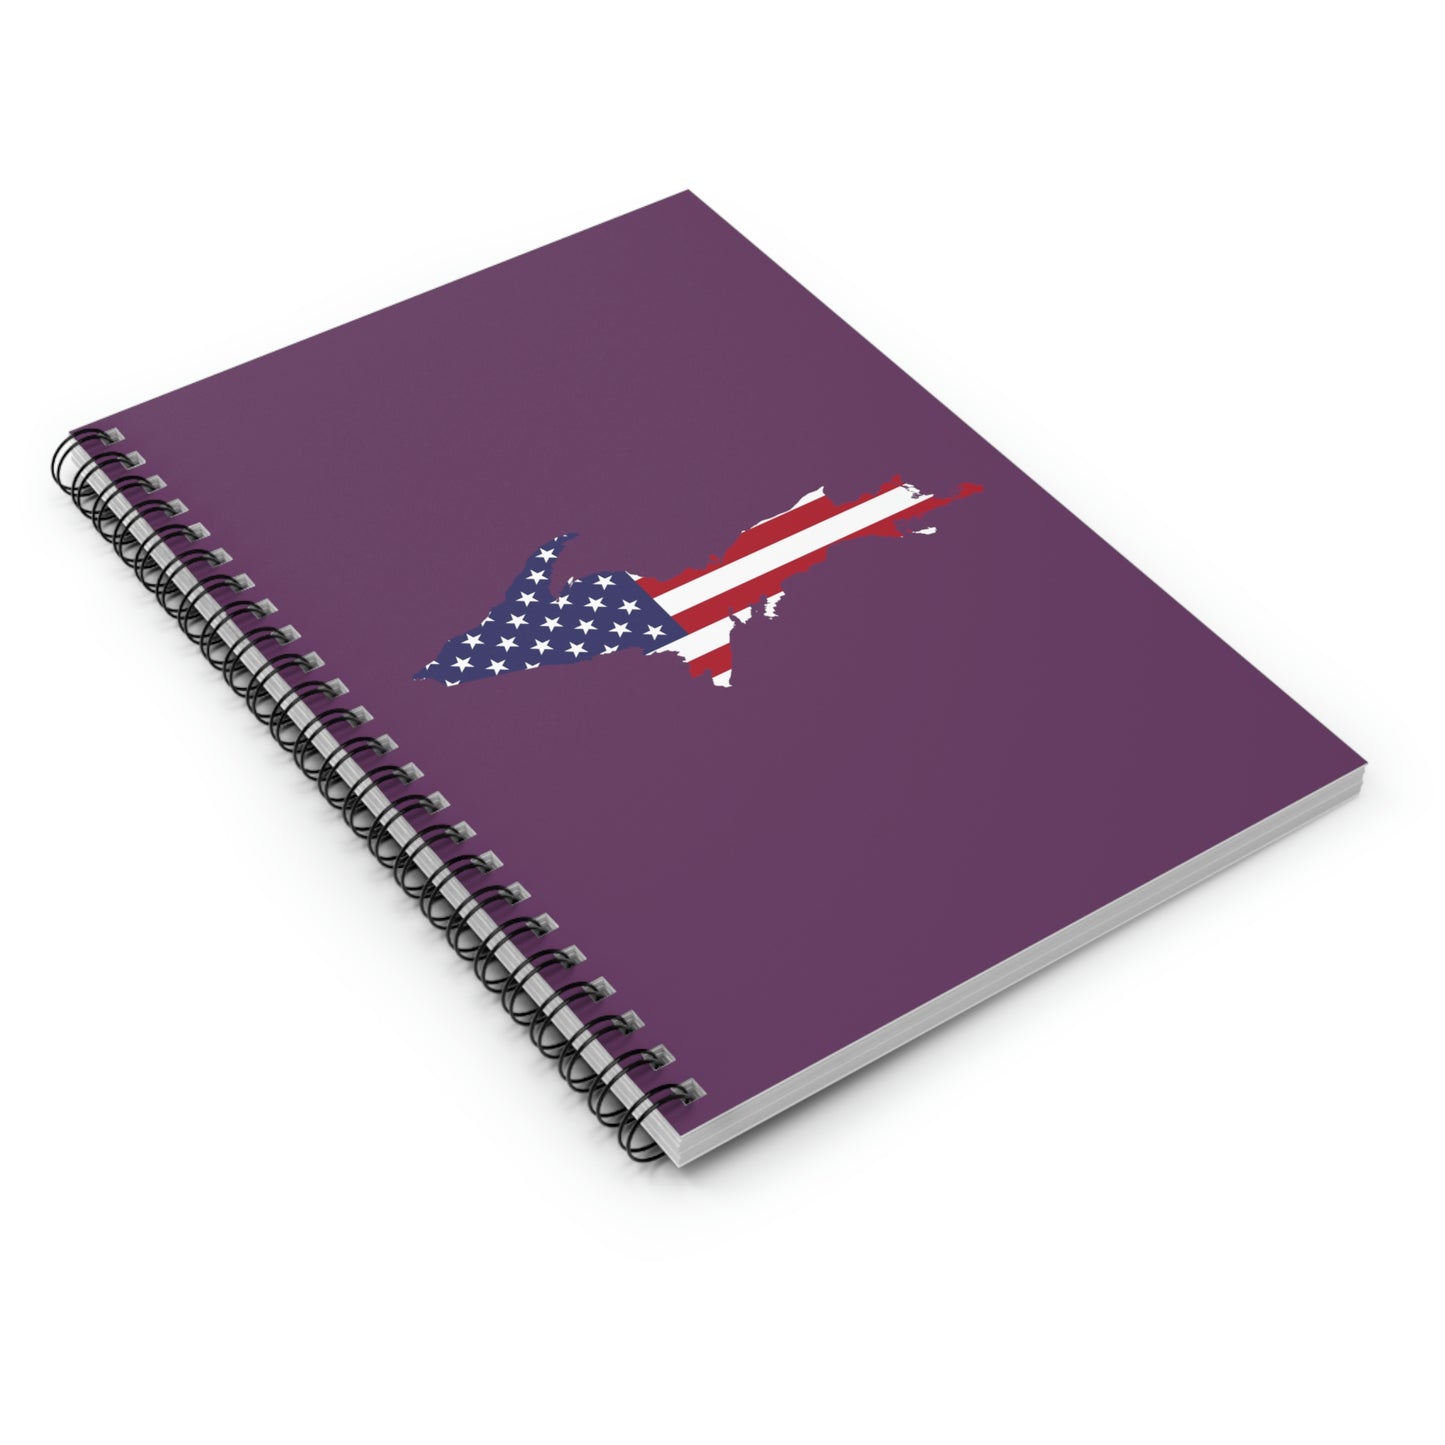 Michigan Upper Peninsula Spiral Notebook (w/ UP USA Flag) | Plum